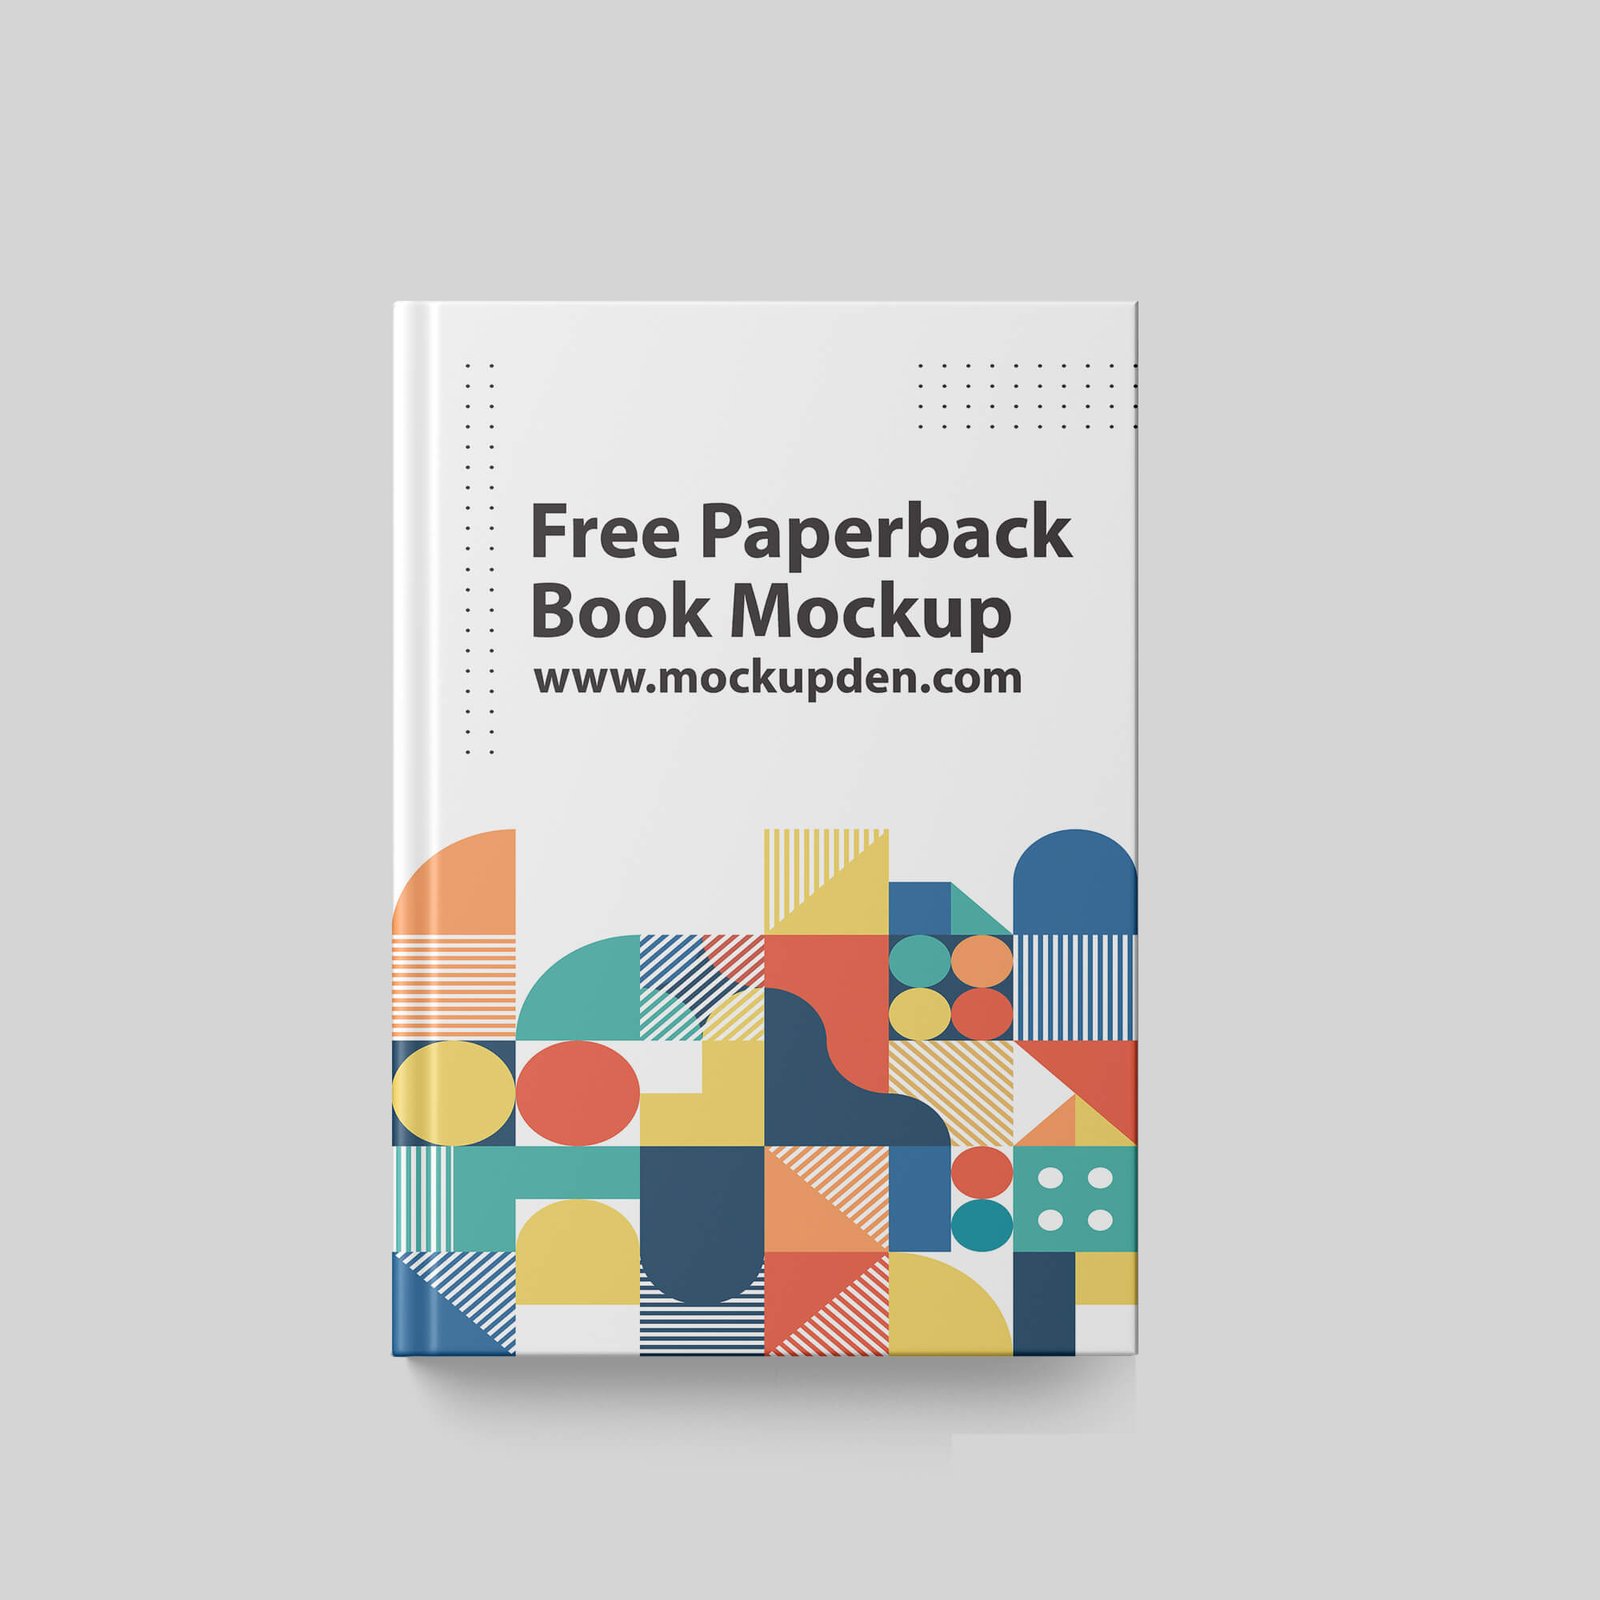 Design Free Paperback Book Mockup PSD Template